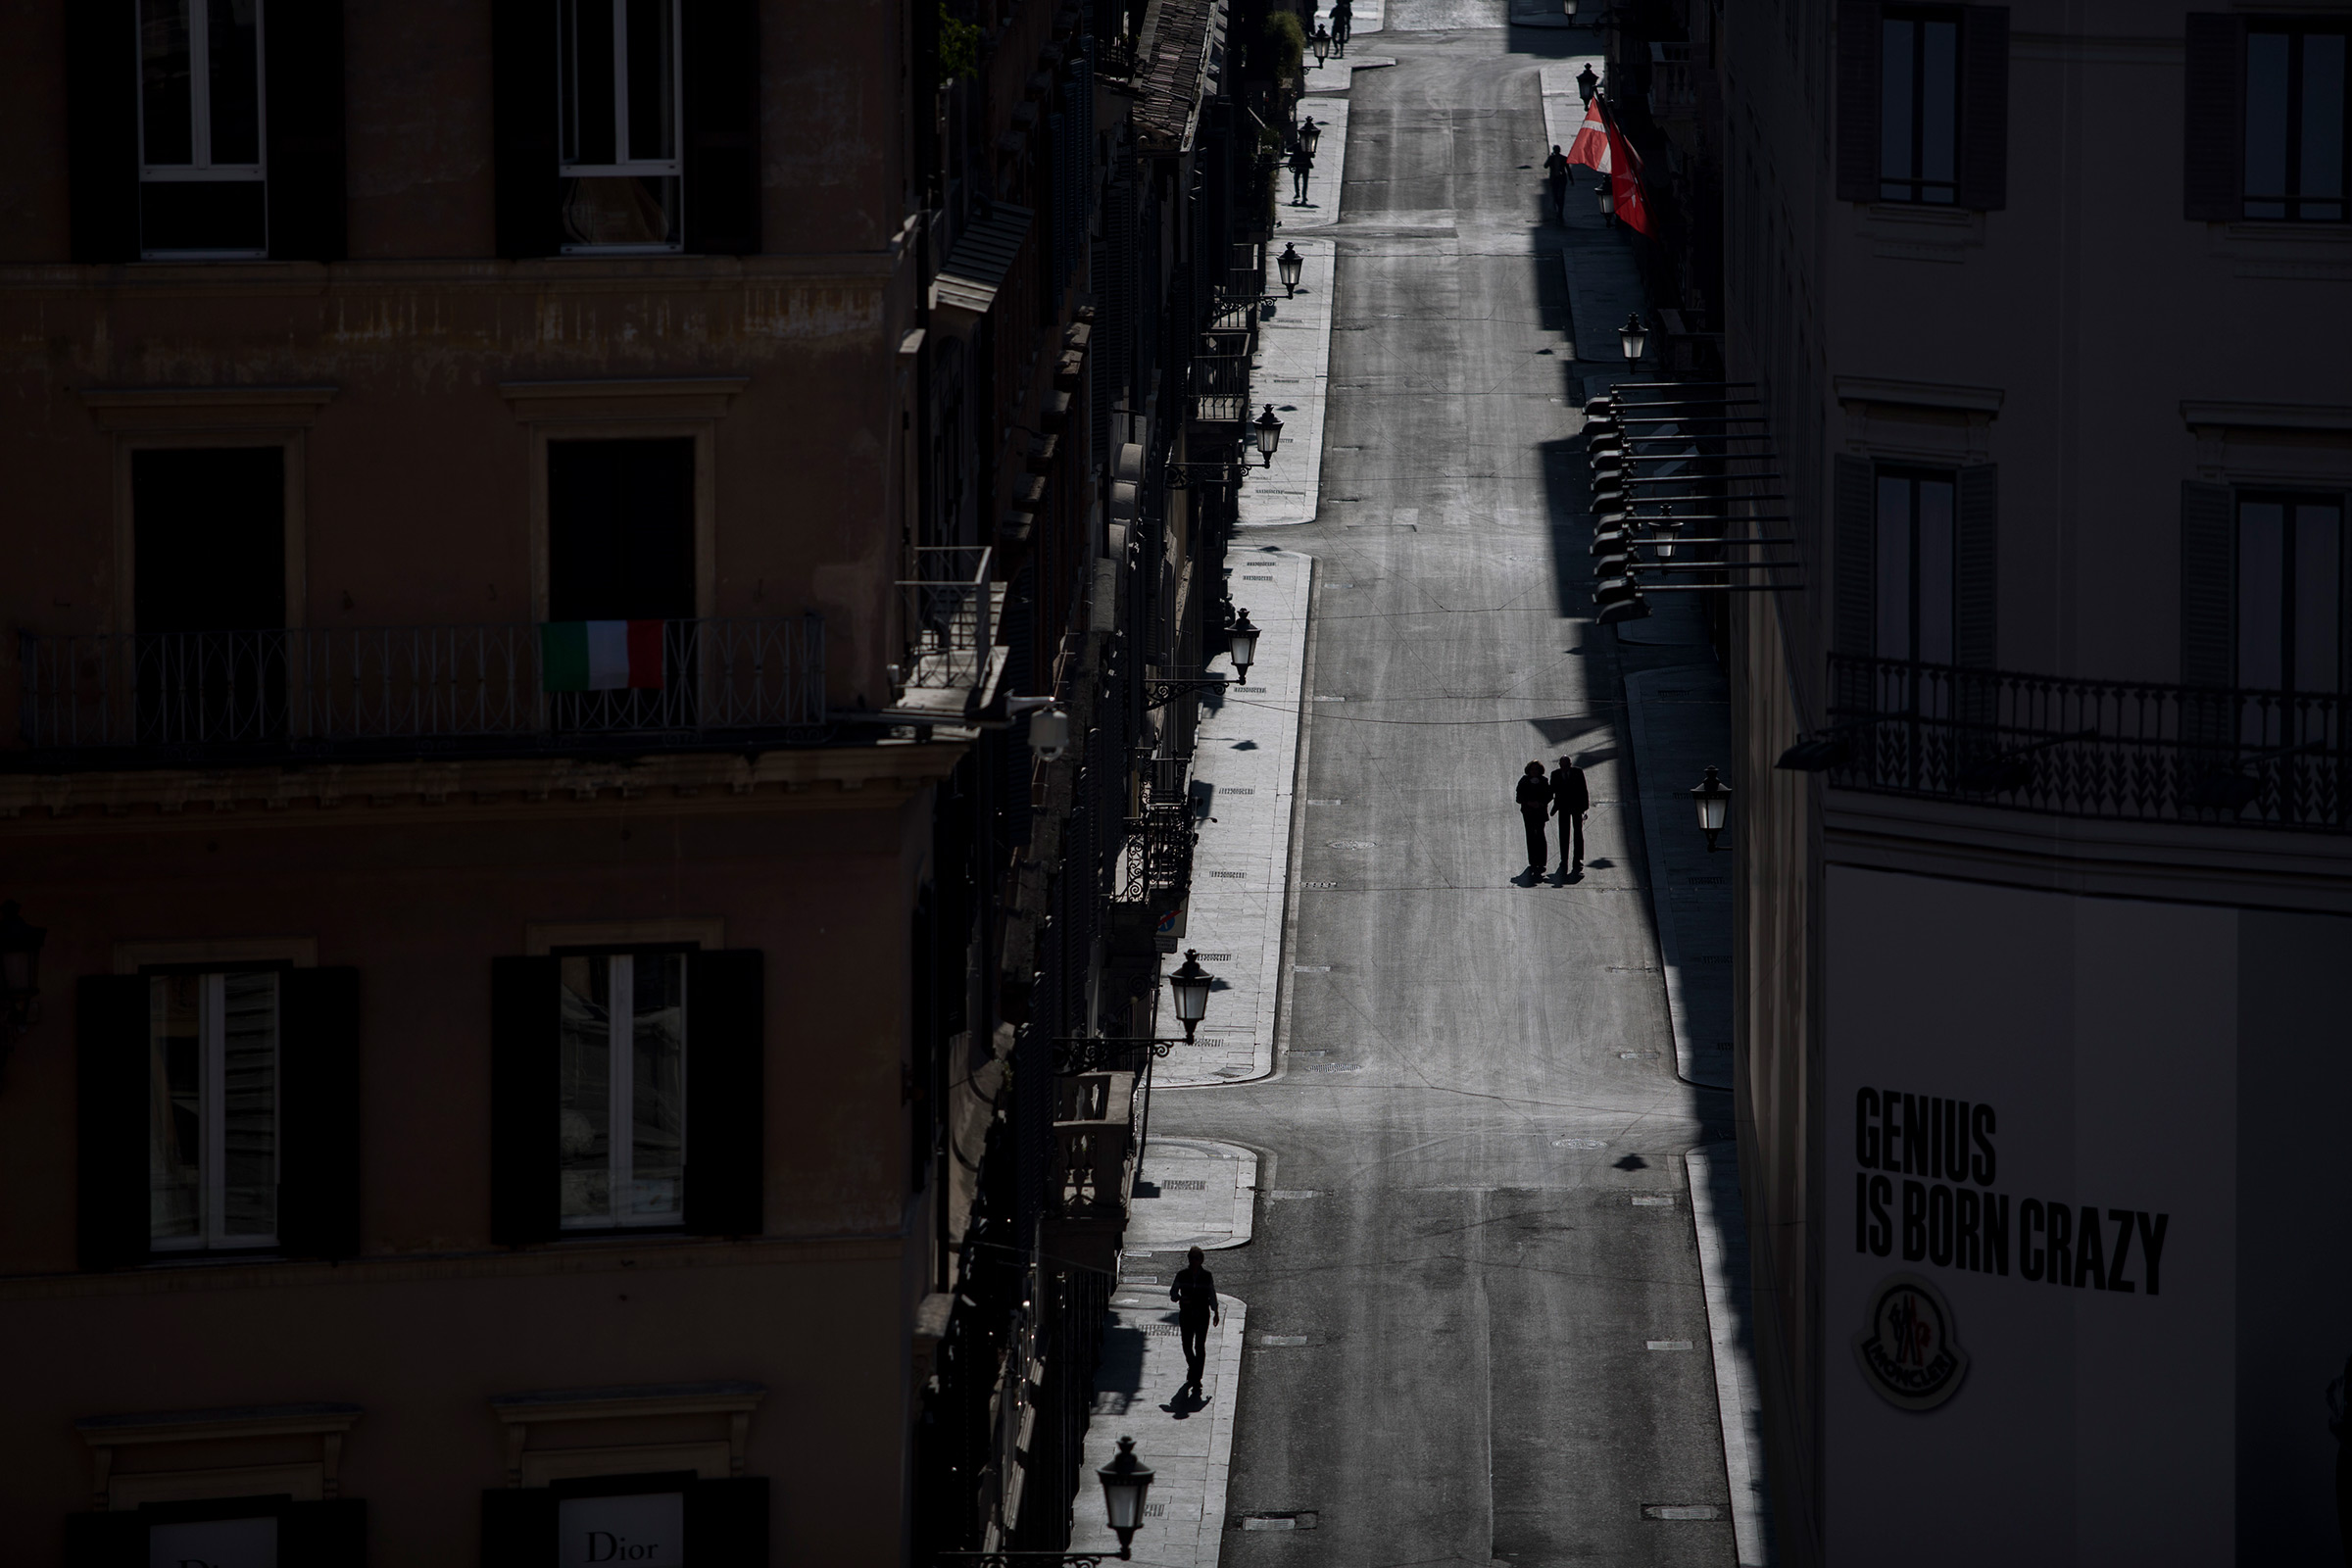 A couple walks in deserted via Condotti in central Rome on April 6, 2020. (Christian Minelli—NurPhoto/Getty Images)